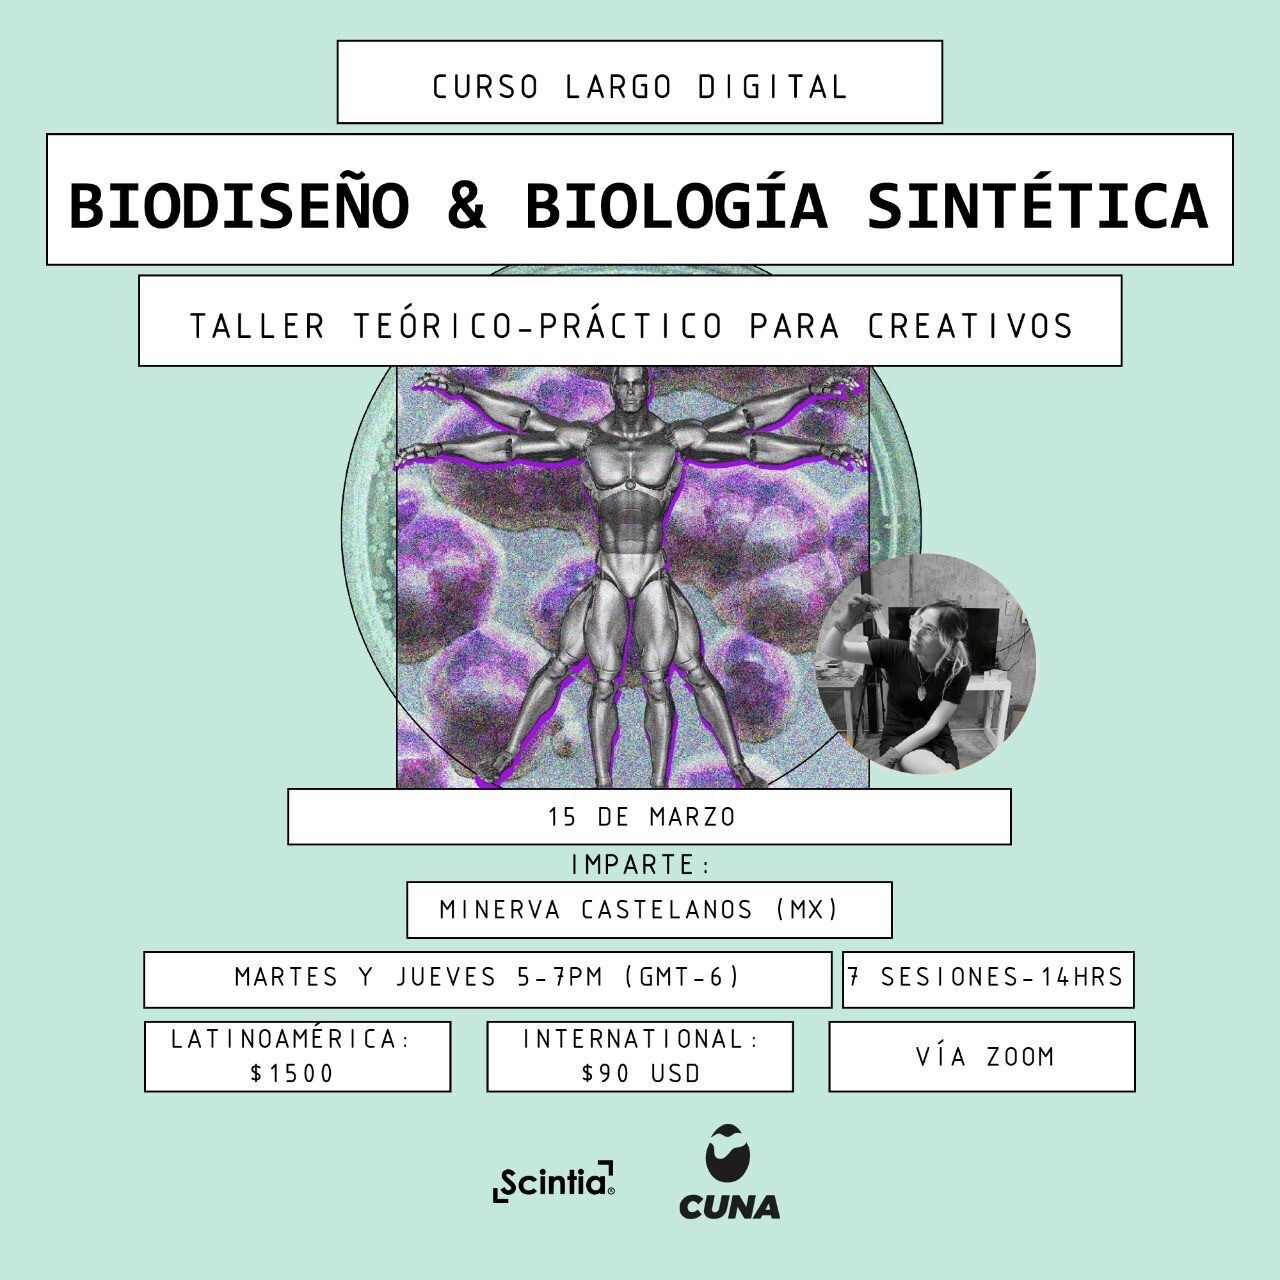 Biodiseño & Biología Sintética